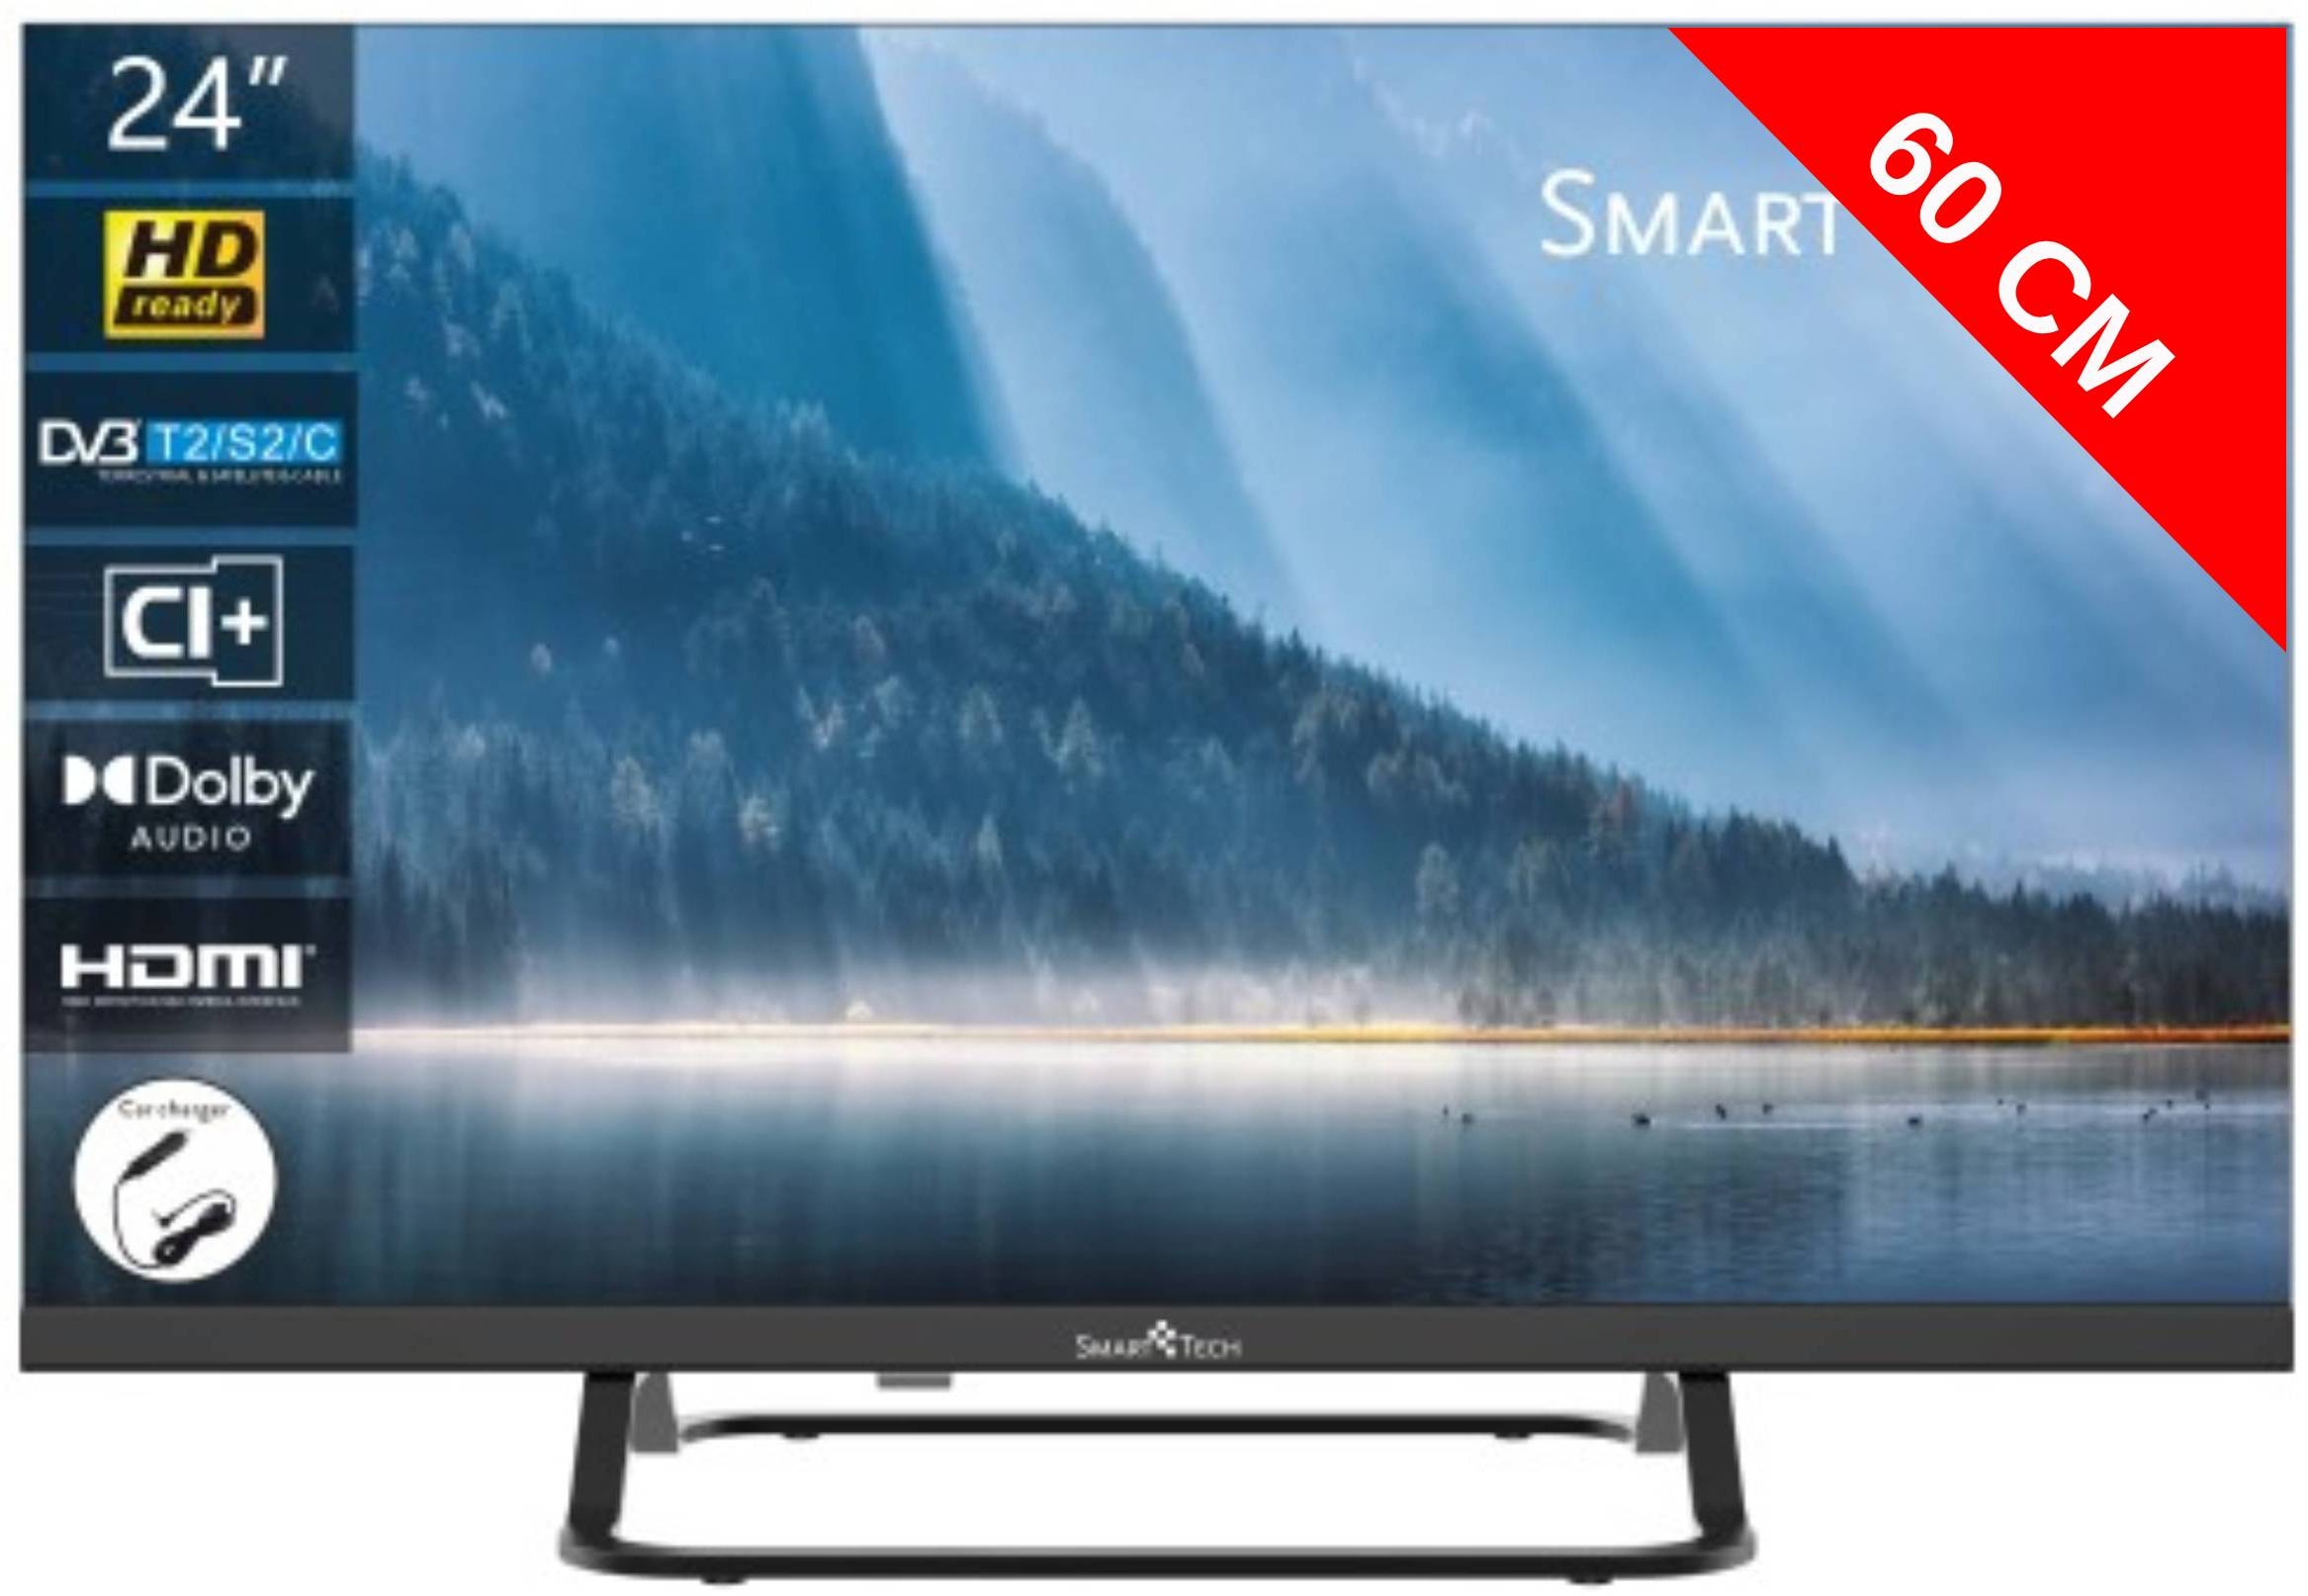 SMART TECH TV LED 60 cm HD Ready 24" - 24HN01VC